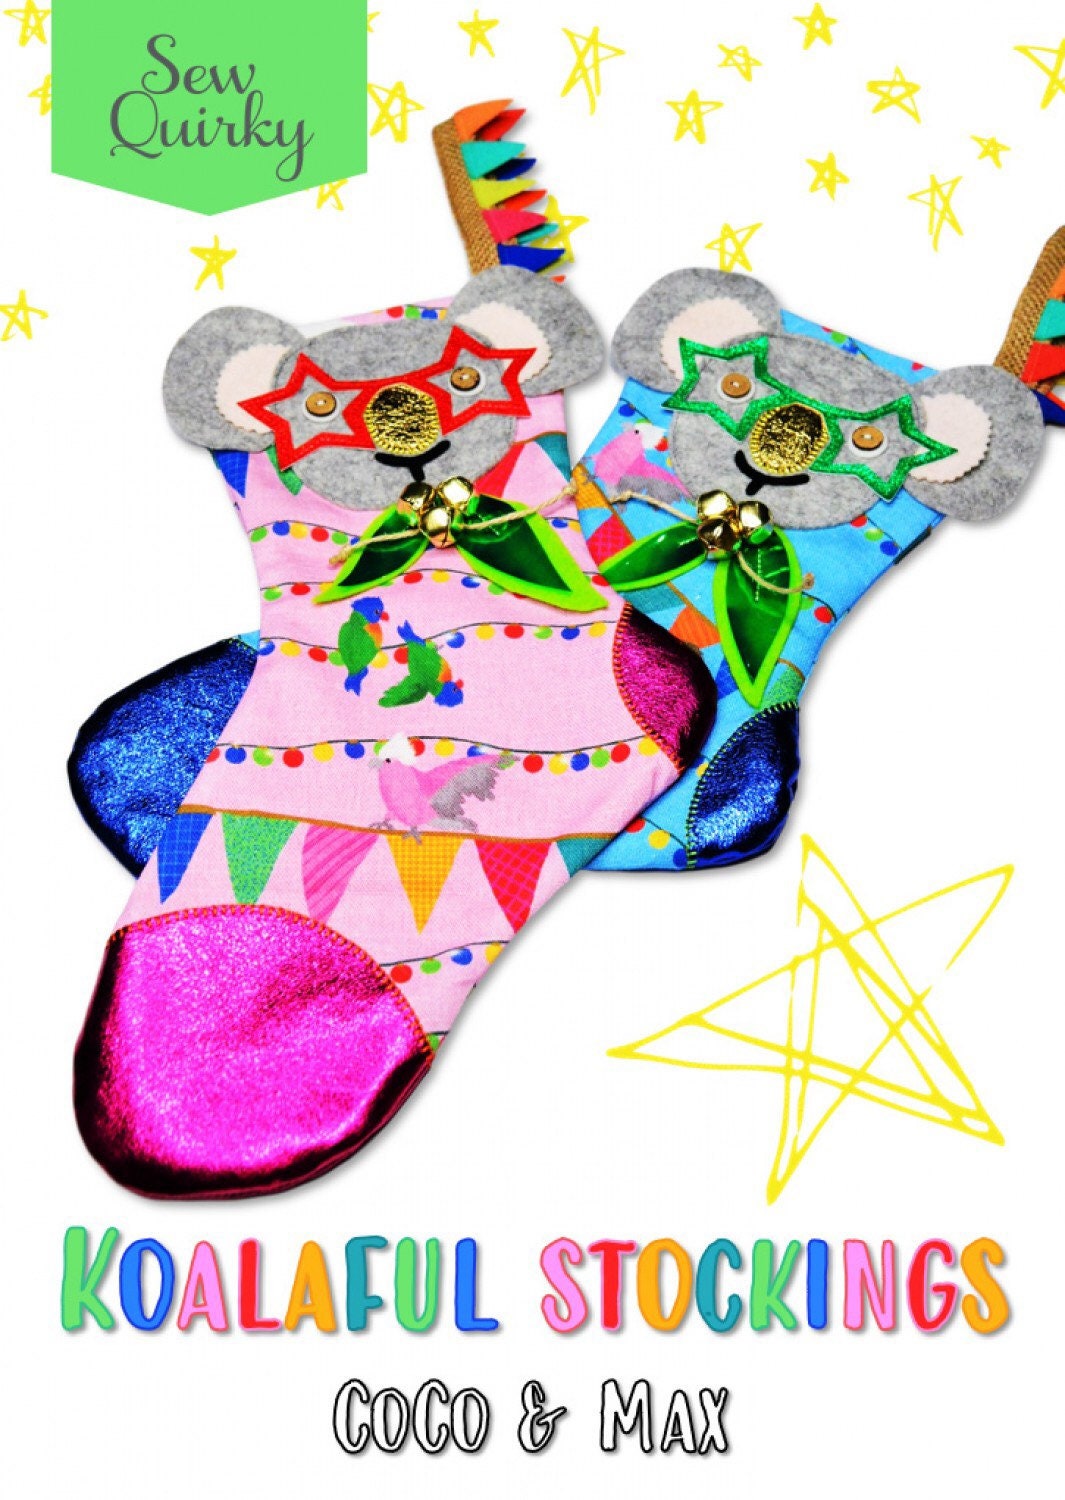 Koalaful Stockings - Sew Quirky - Mandy Murray - Appliqué Pattern - Stocking Pattern